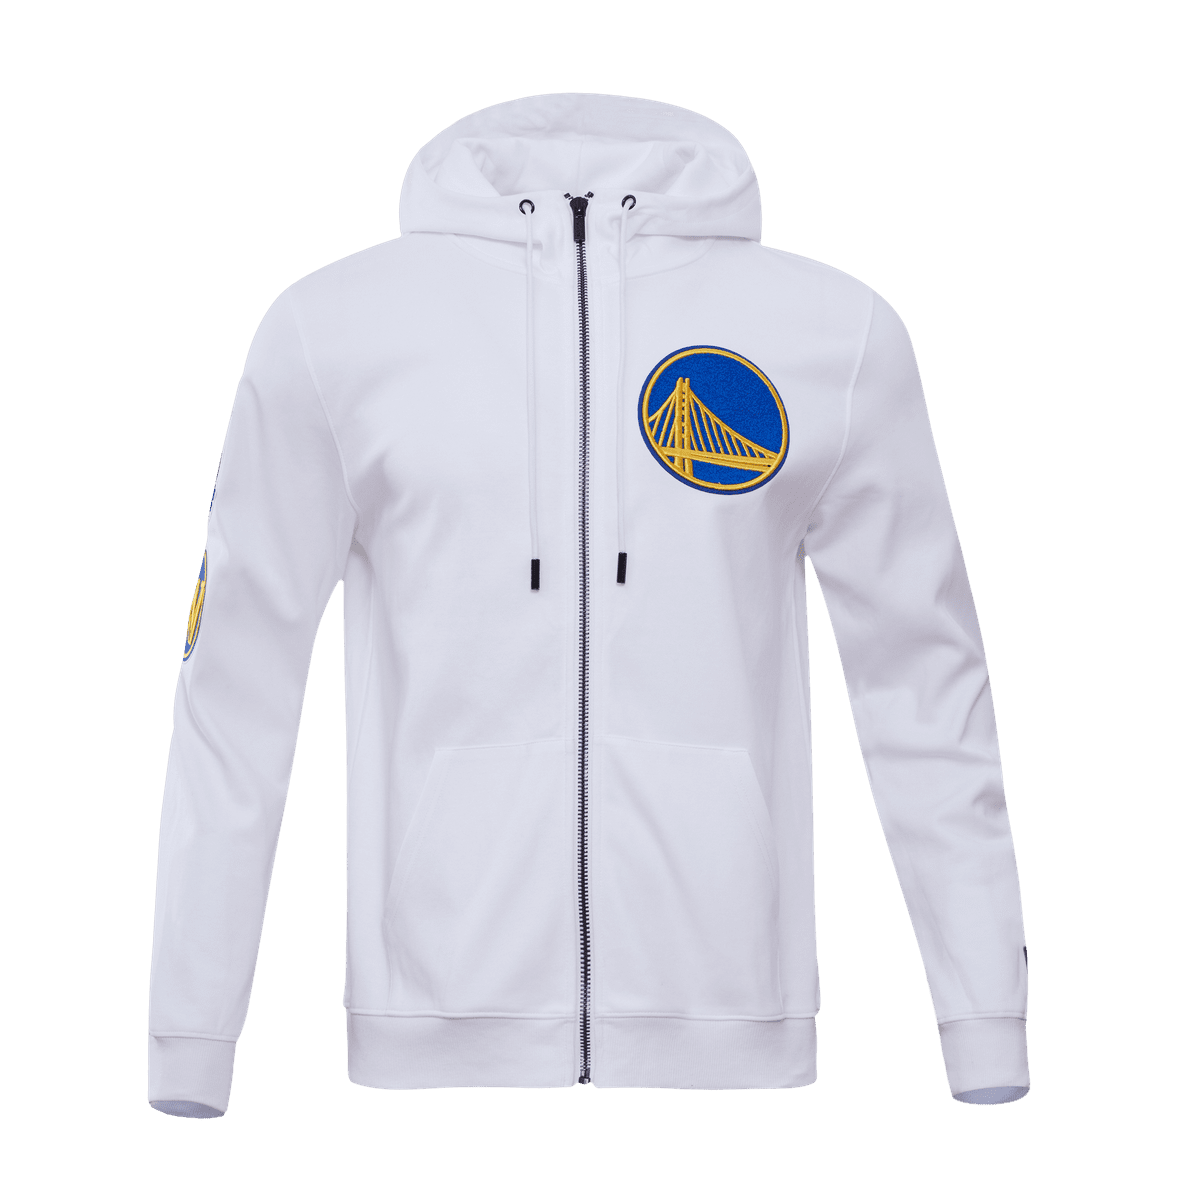 Pro Standard Golden State Warriors Varsity Jacket – DS Online